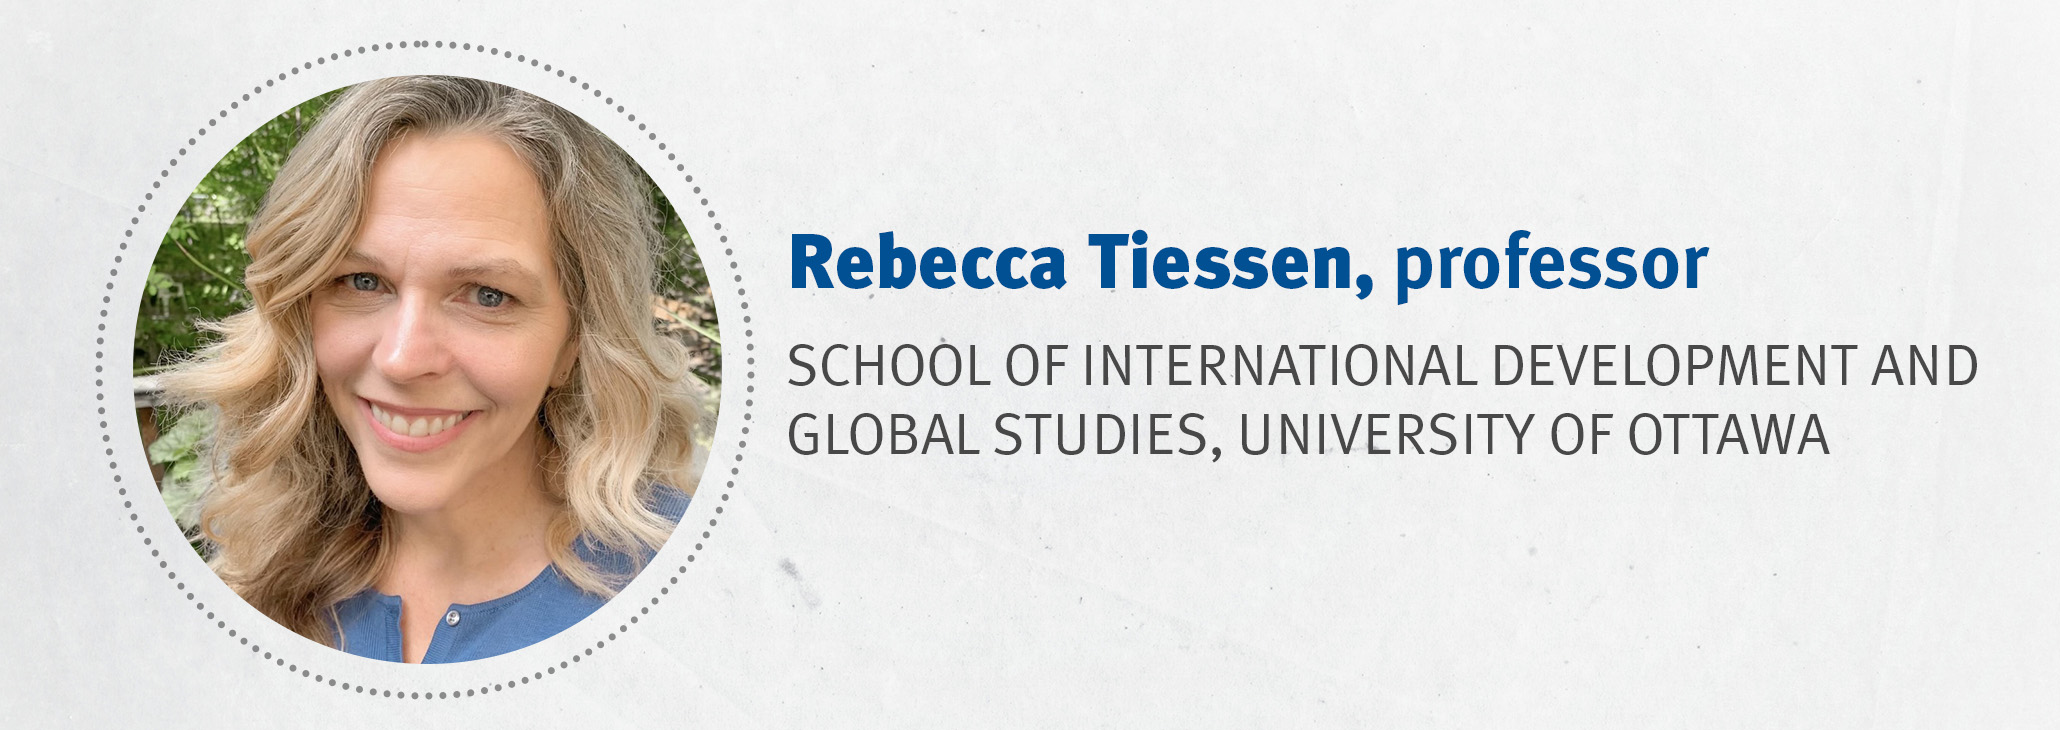 Rebecca Tiessen, professor  University of Ottawa